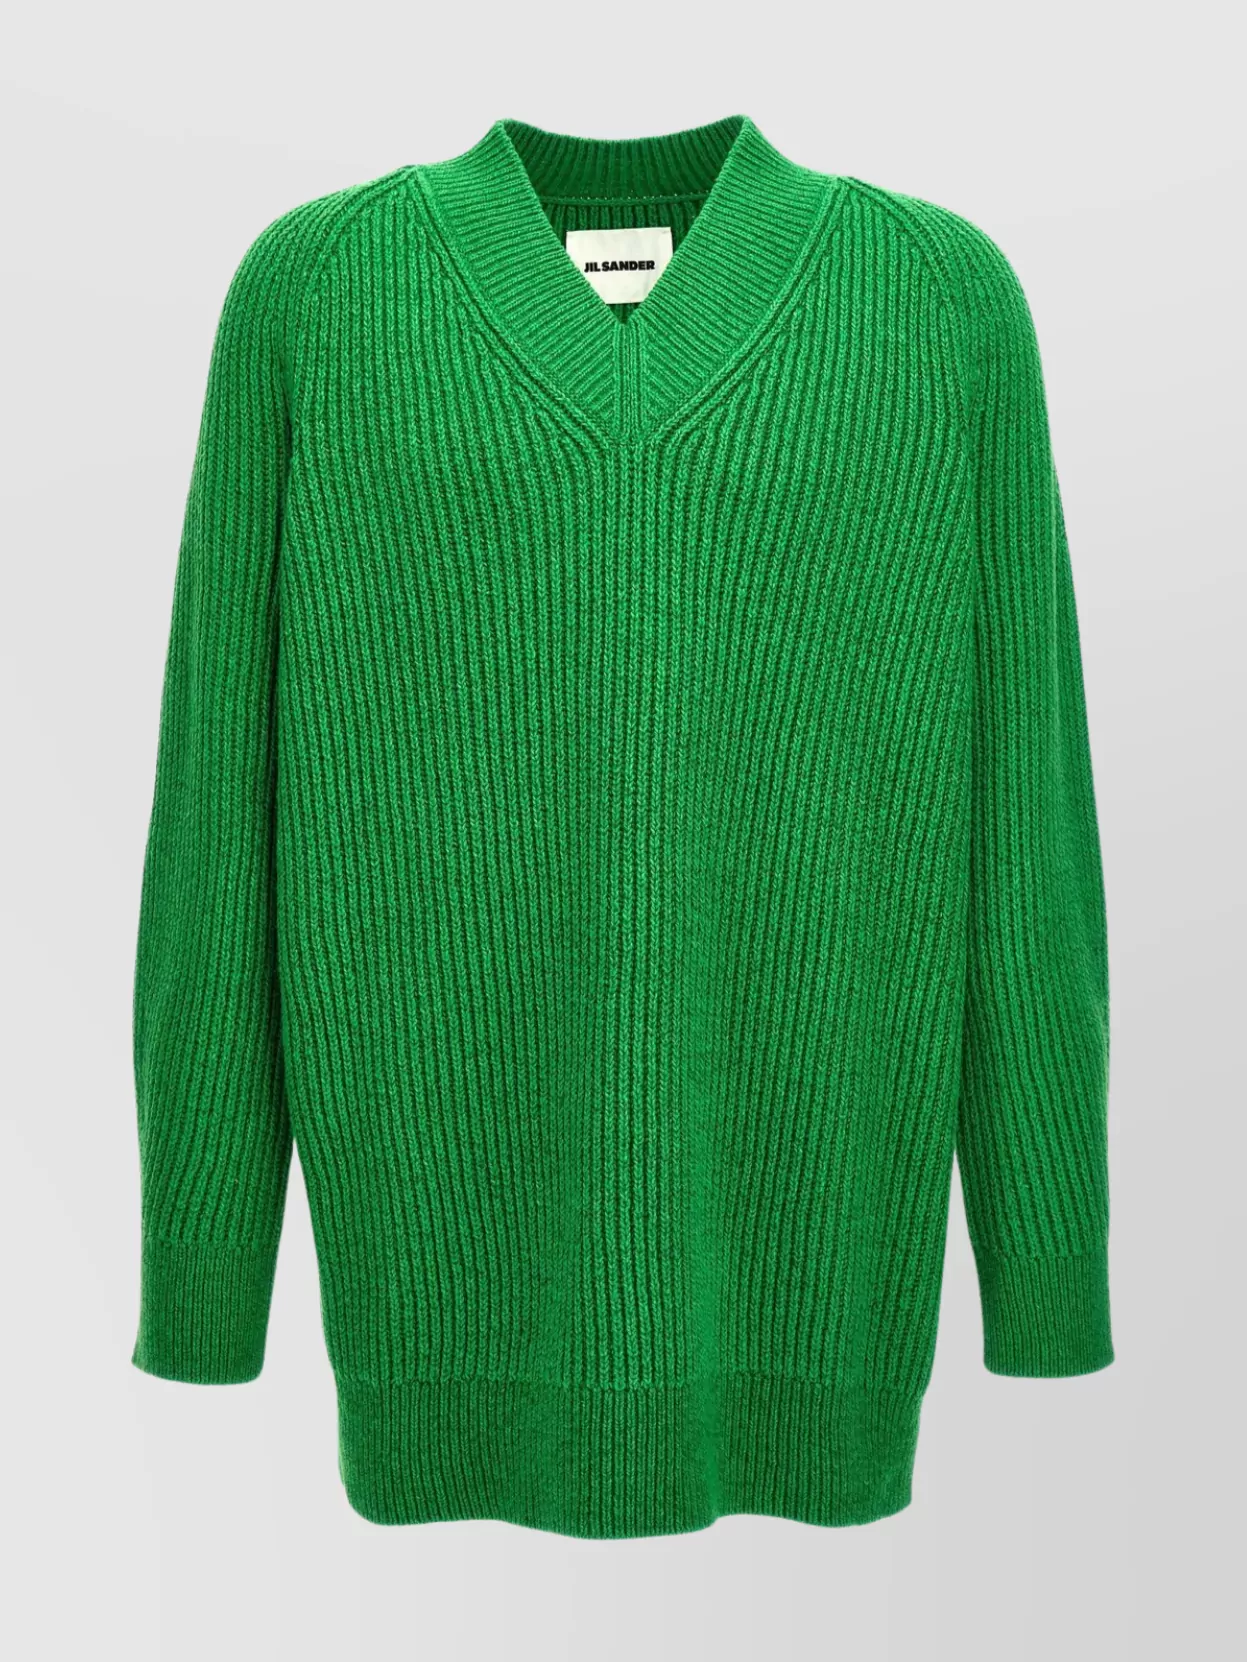 Jil Sander Ribbed Knit Jumper In Green